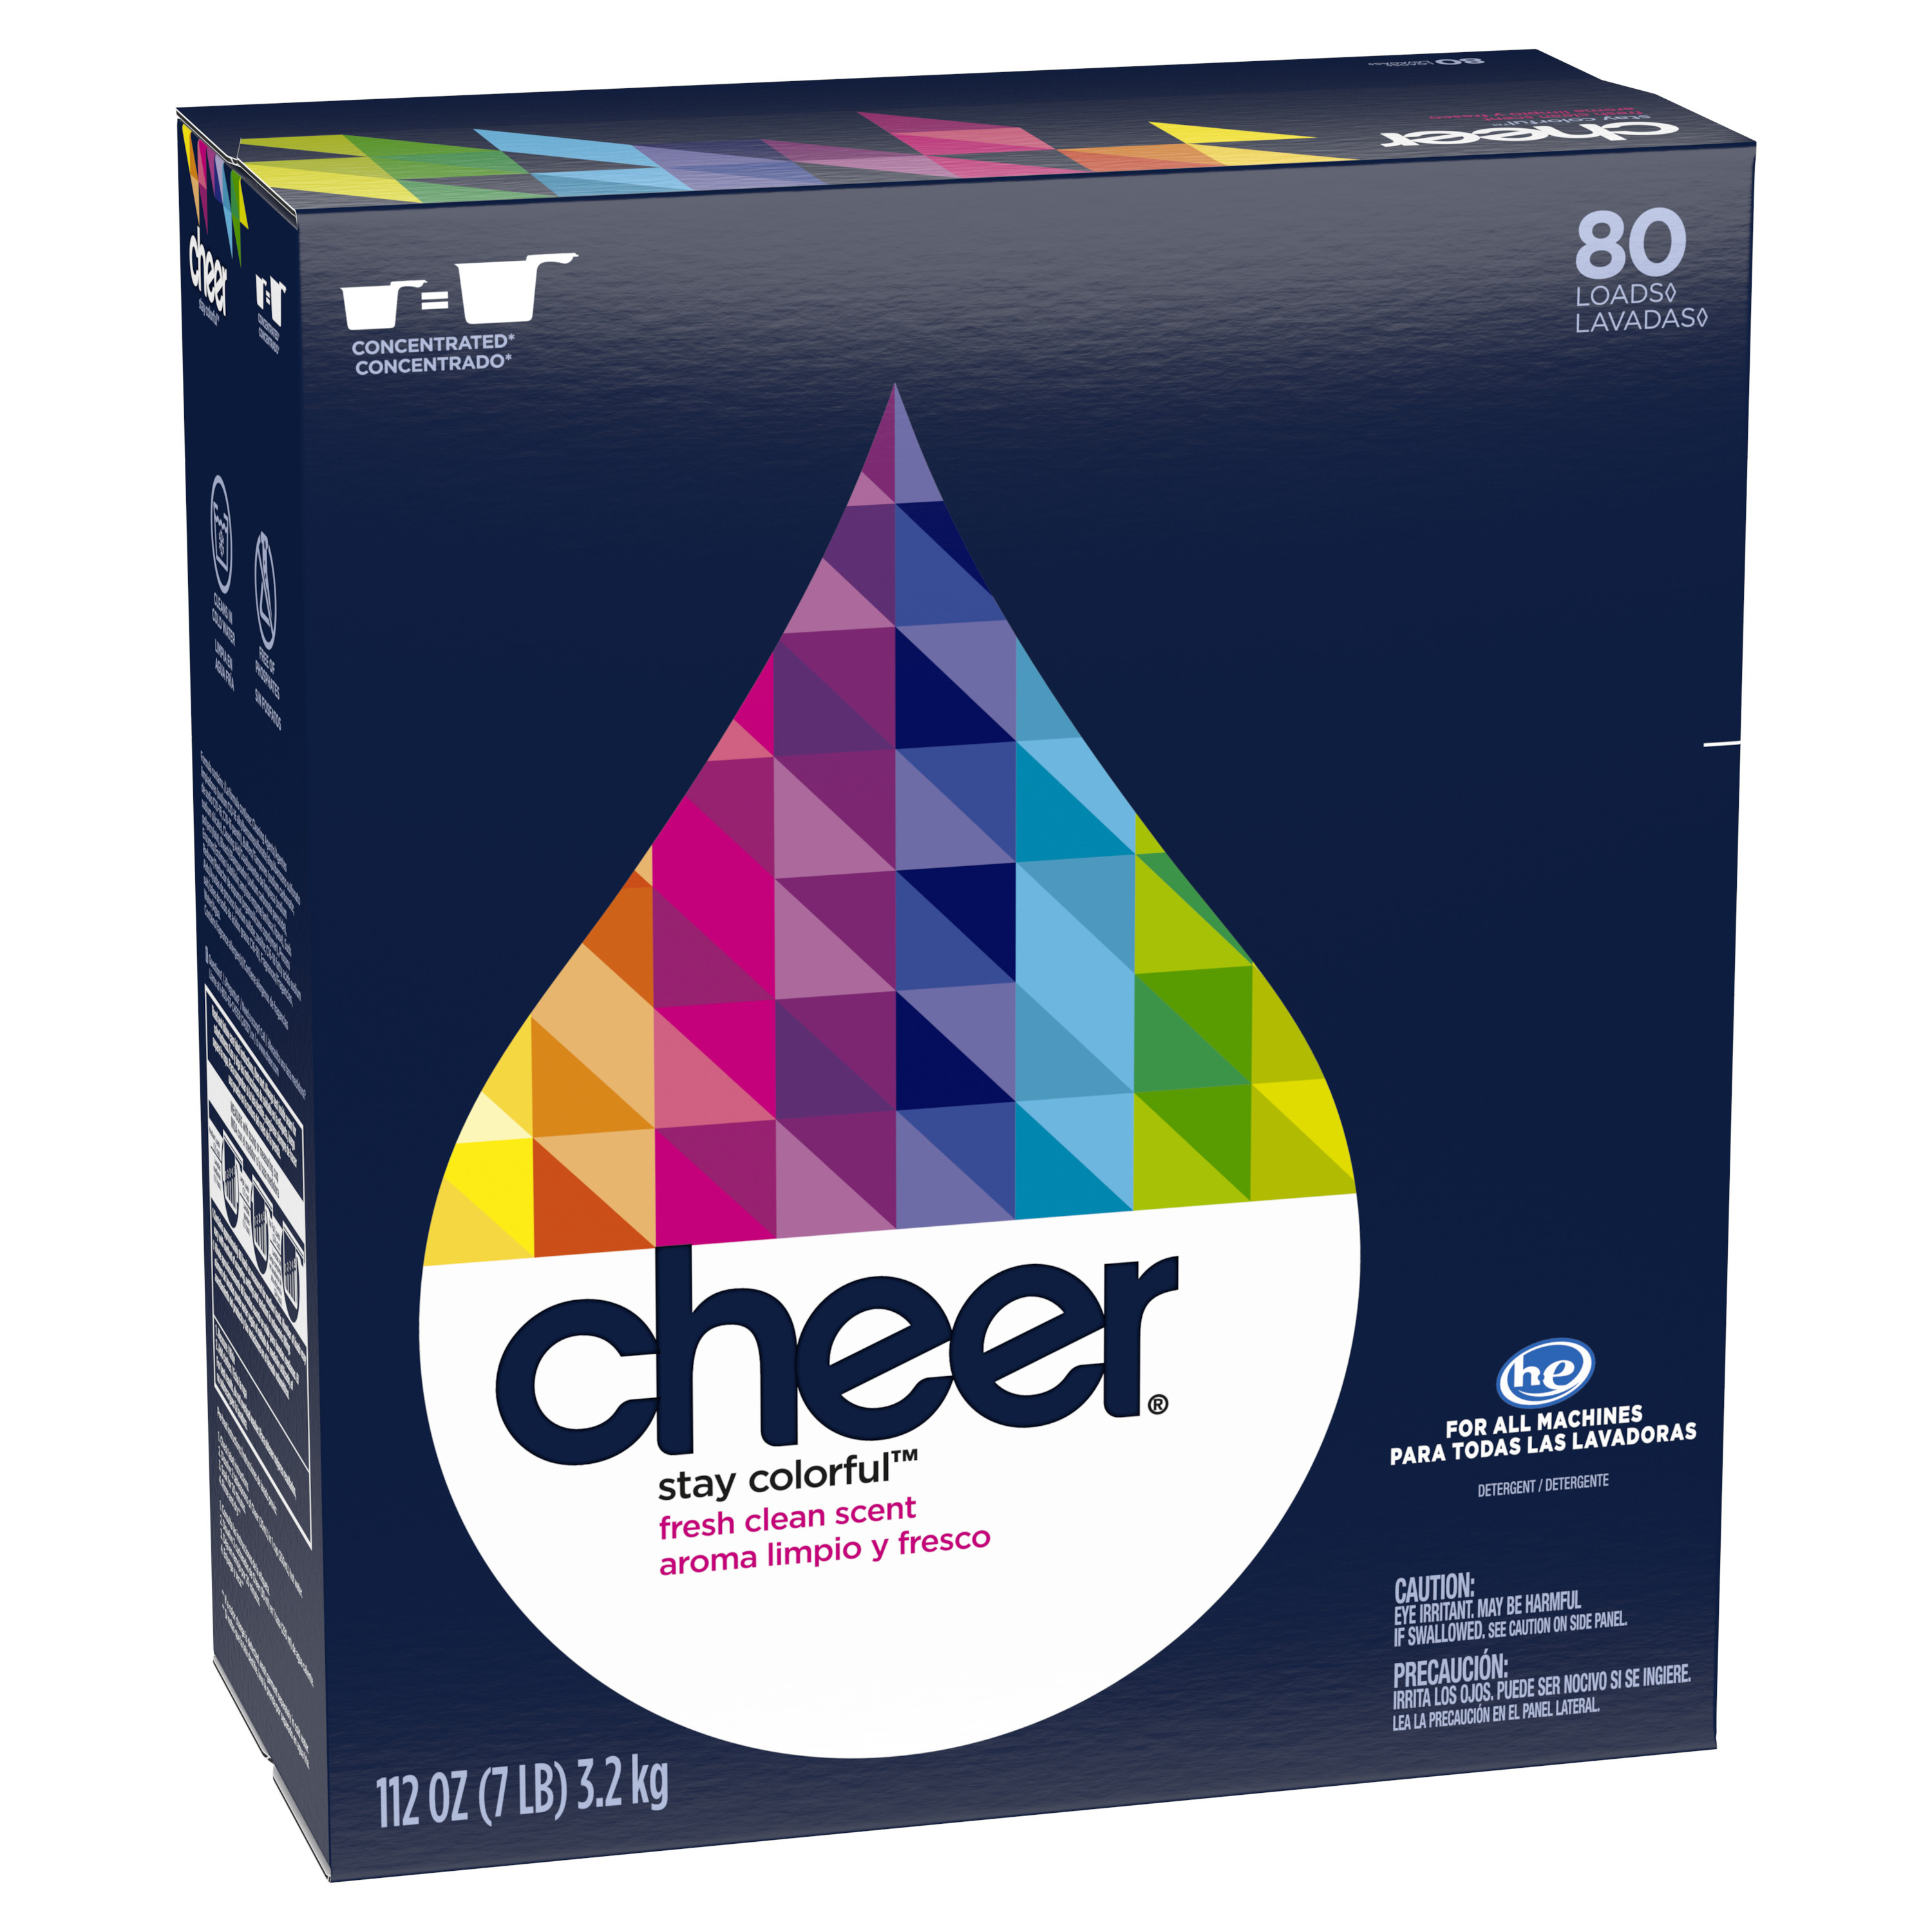 Cheer Powder Laundry Detergent, Fresh Clean, 80 Loads 112 oz - image 2 of 5